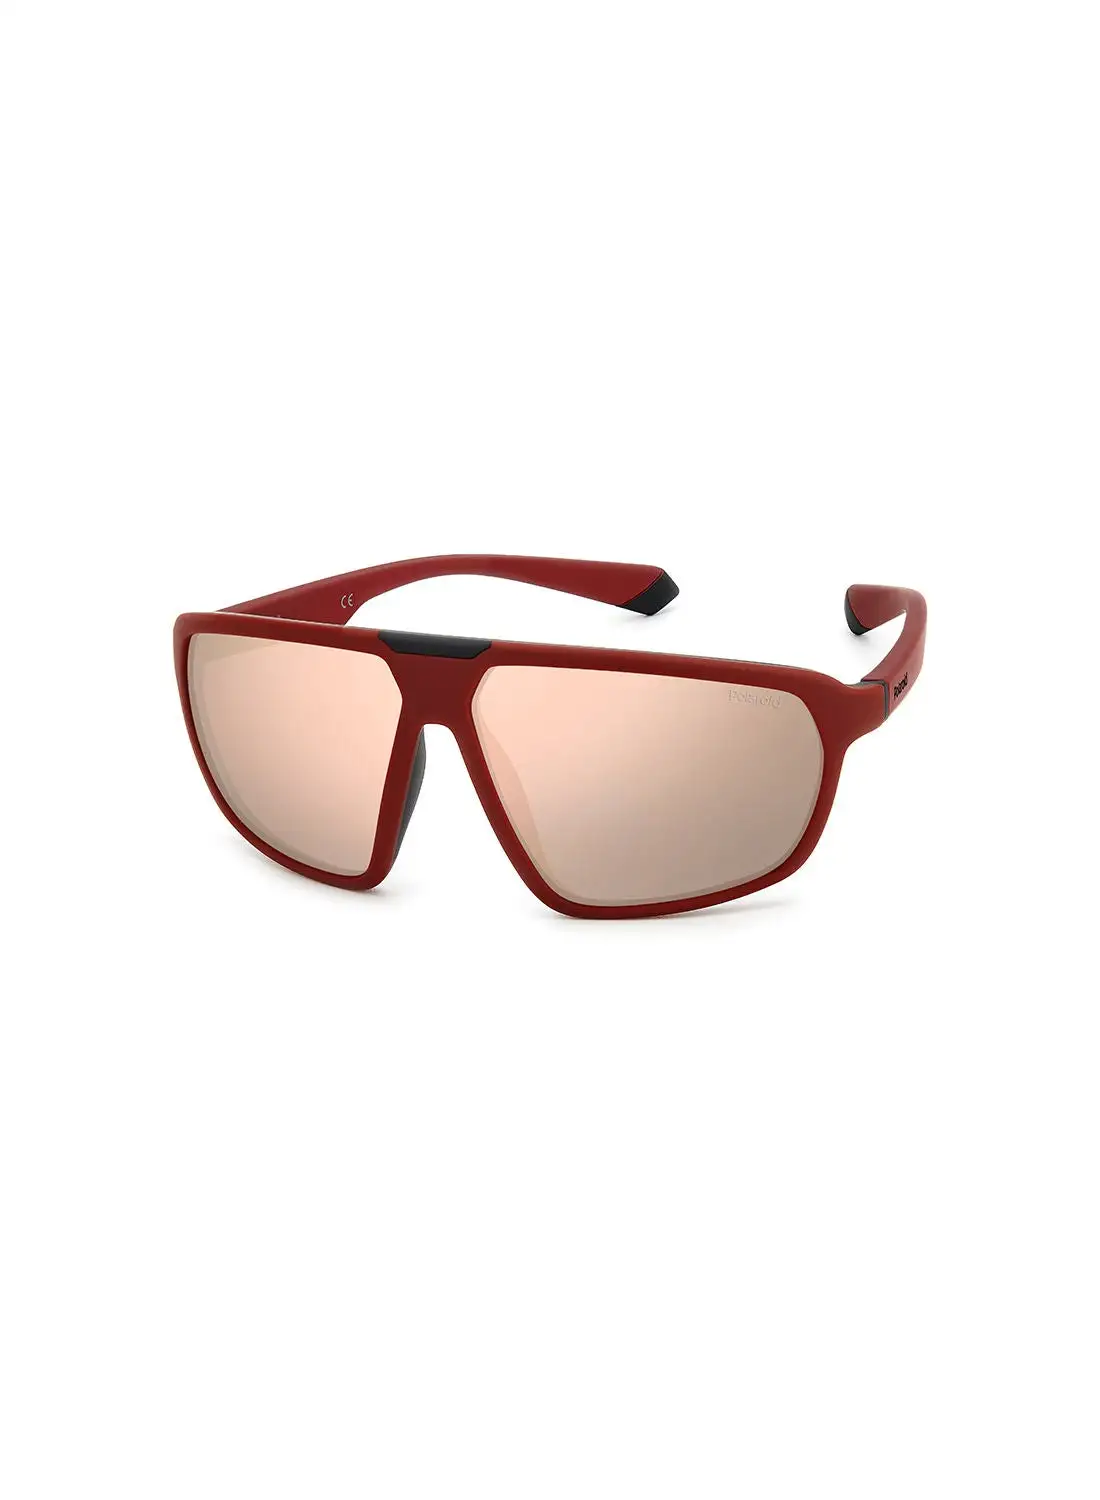 Polaroid Unisex UV Protection Square Sunglasses - Pld 2142/S Mtburg Bk 61 - Lens Size: 61 Mm